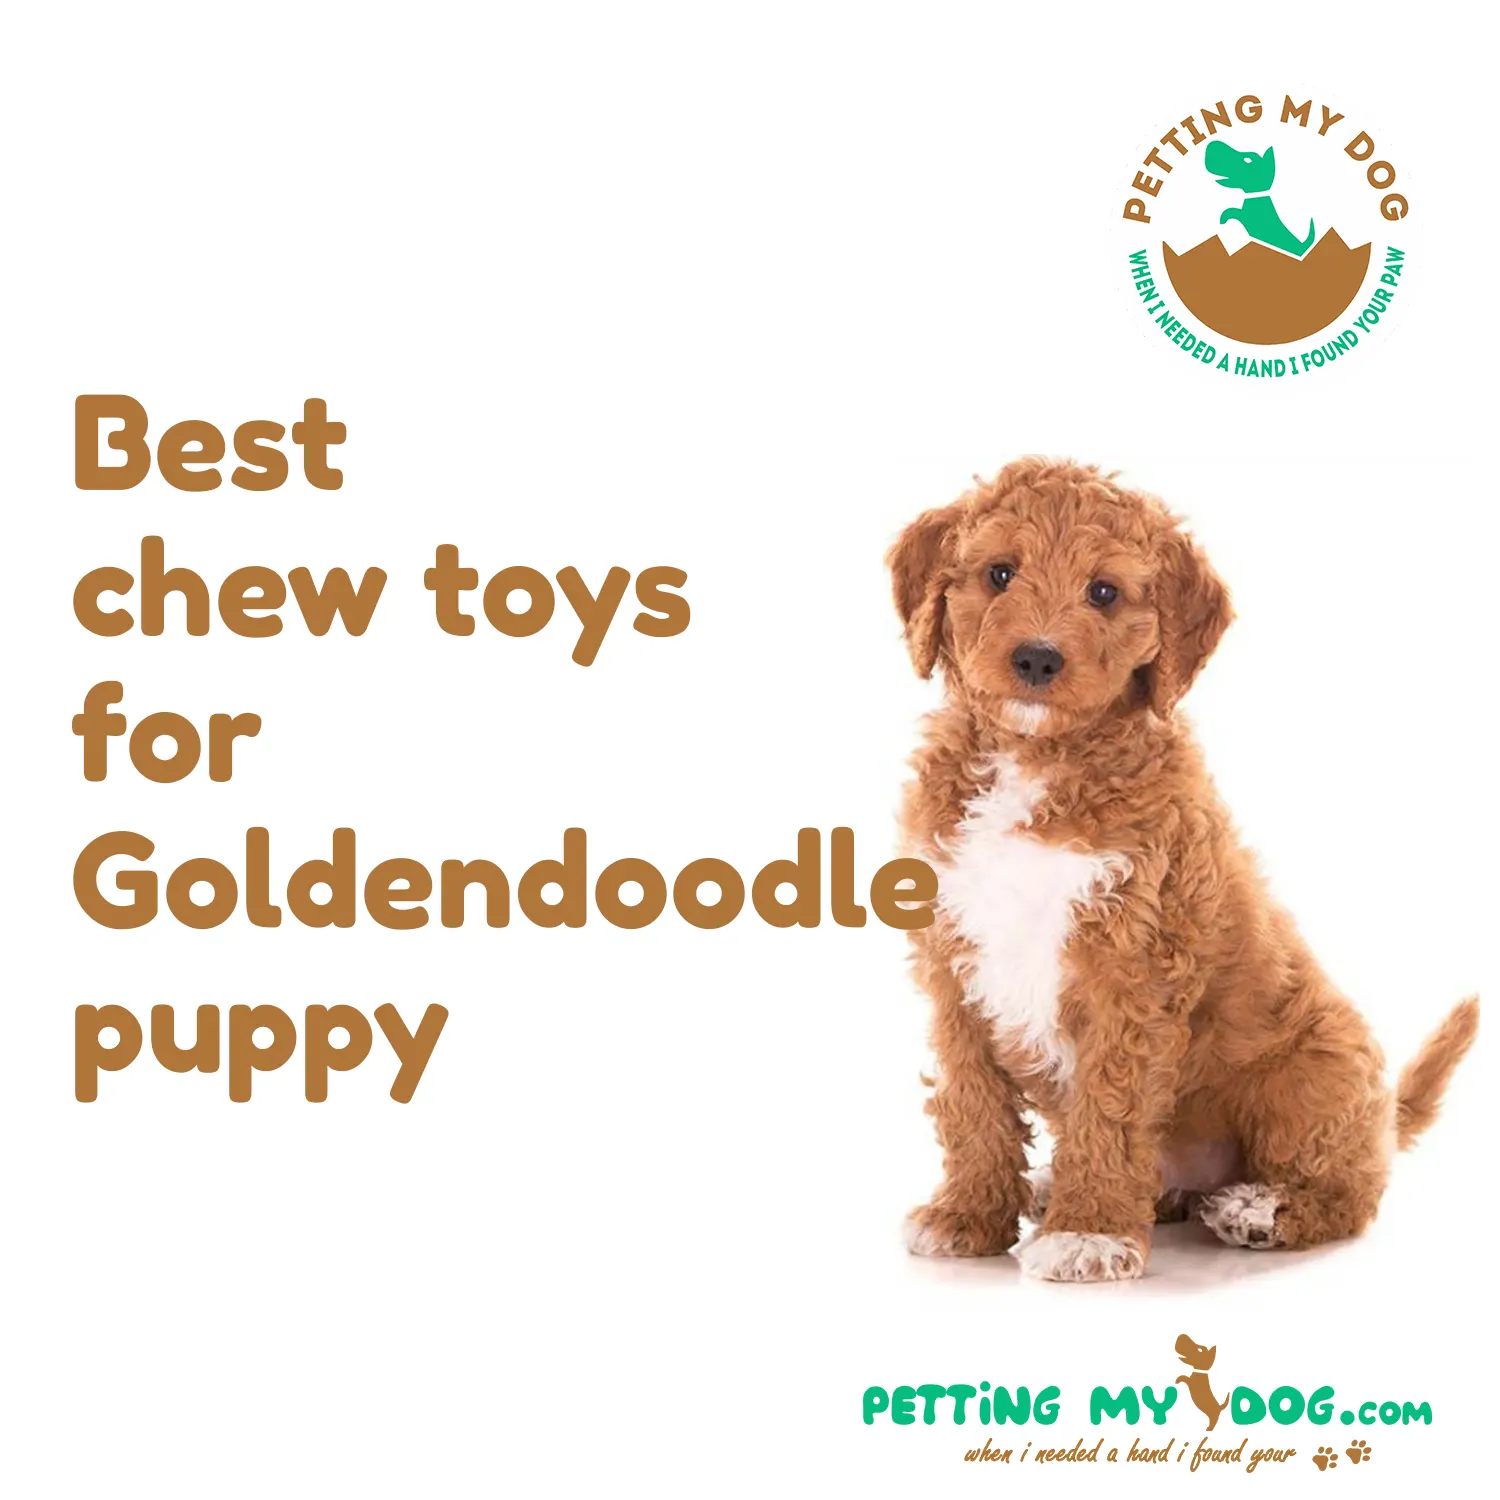 https://www.pettingmydog.com/wp-content/uploads/2022/03/Best-chew-toys-for-Goldendoodle-puppy.webp